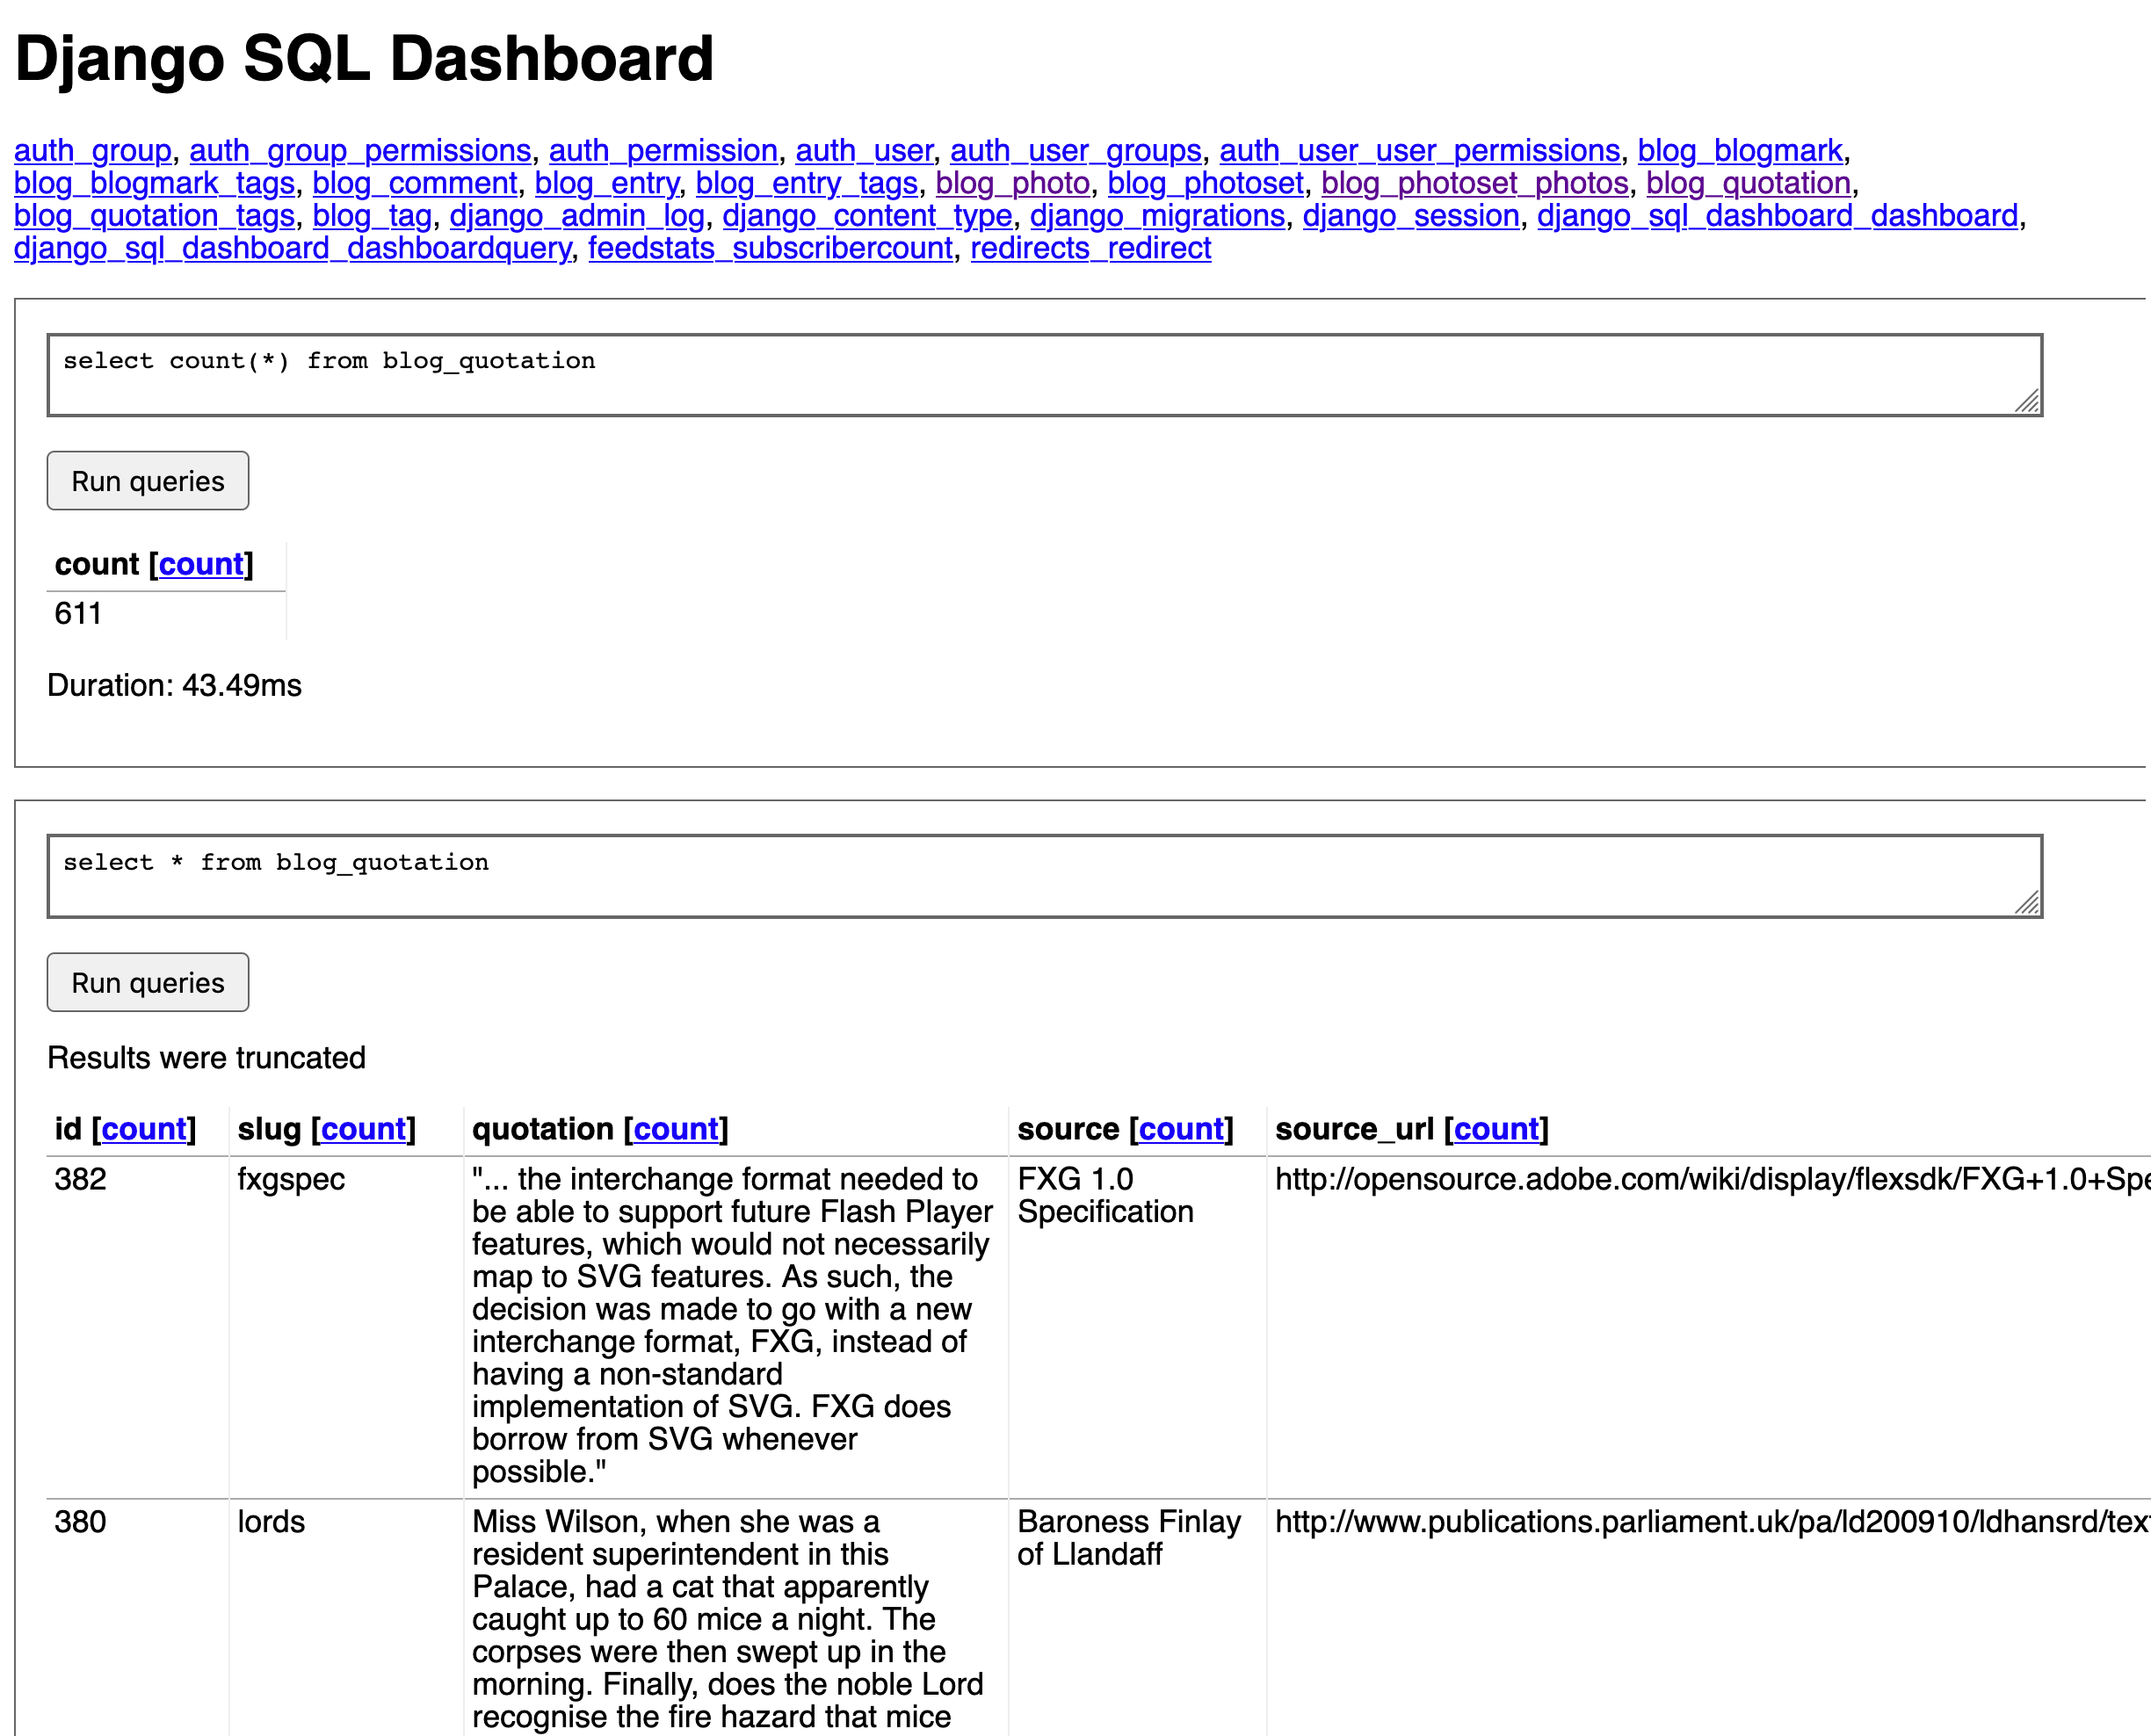 Django_SQL_Dashboard screenshot